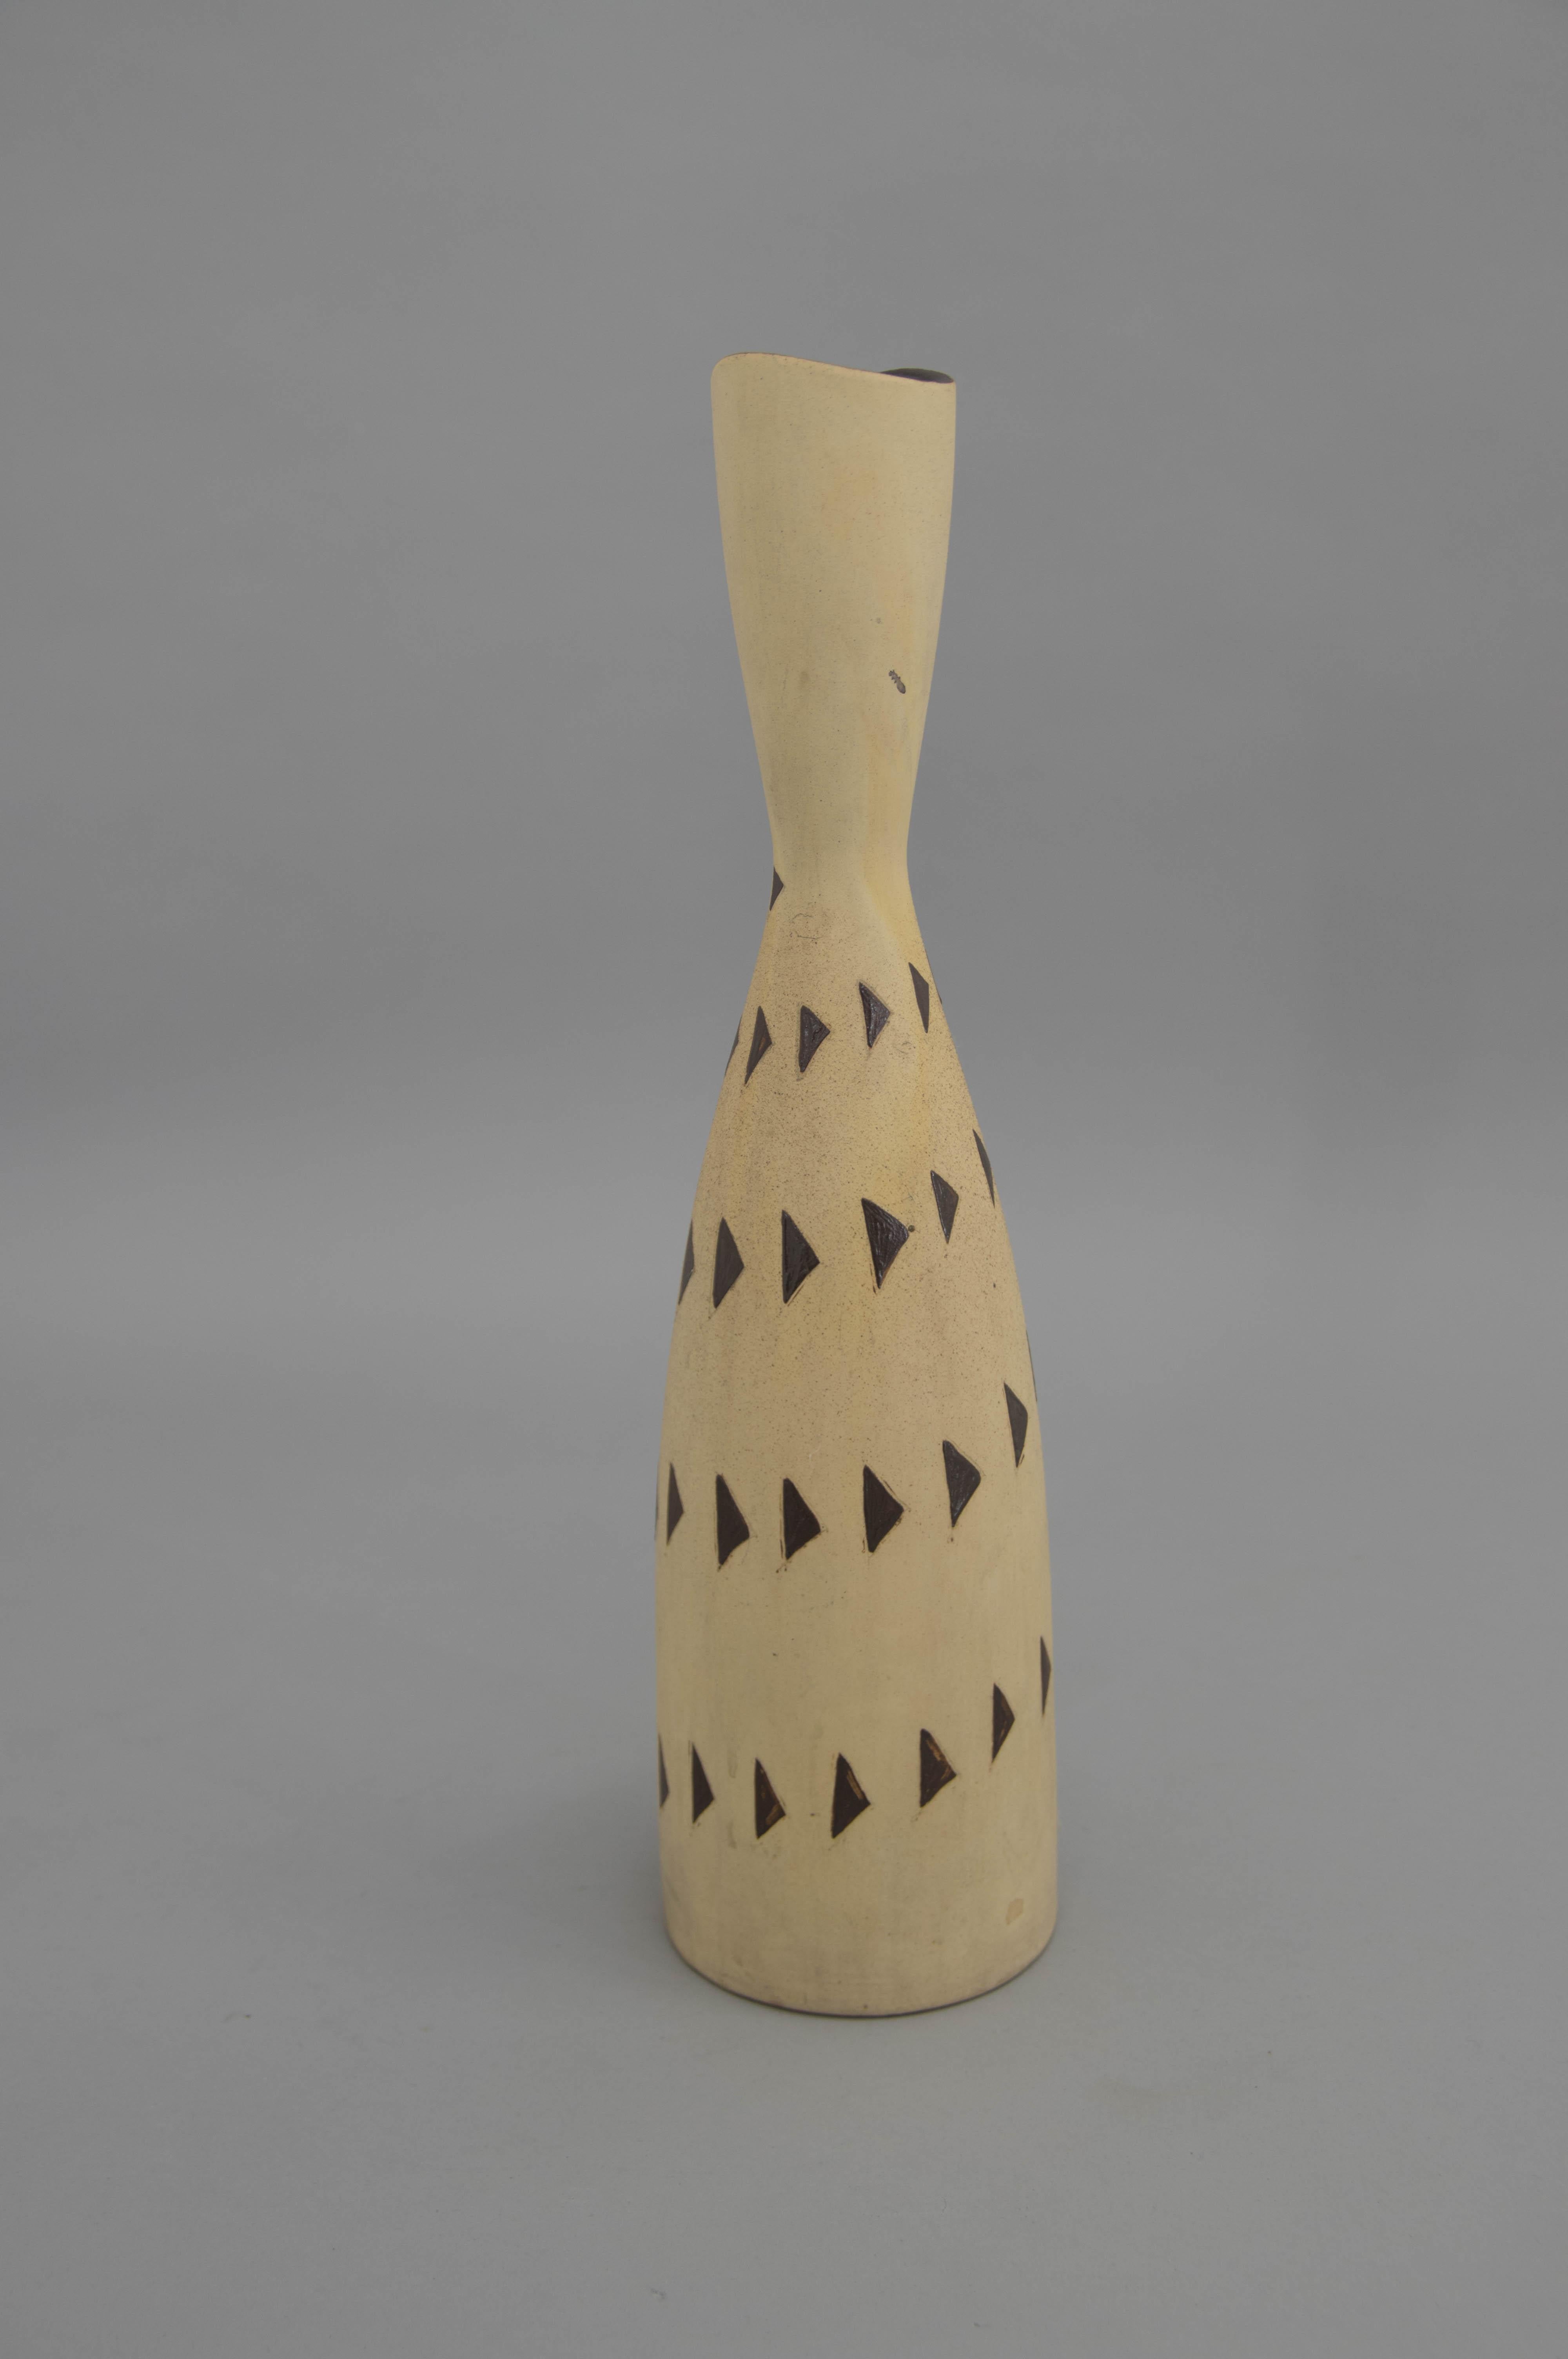 Ceramic vase made in Czechoslovakia in 1960s
Very good original condition.